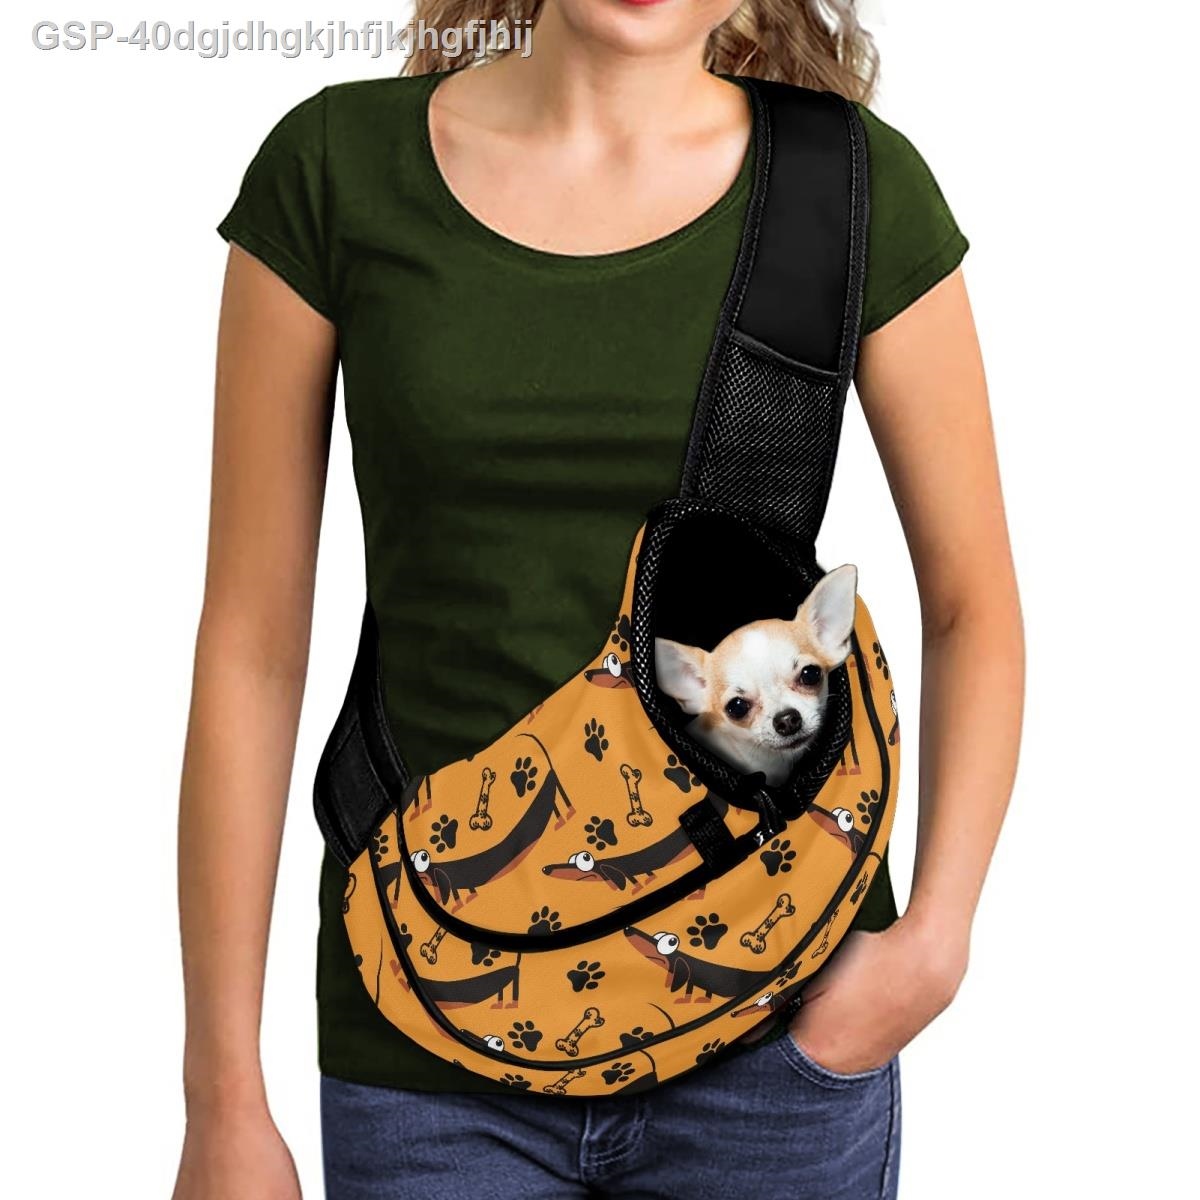 40dgjdhgkjhfjkjhgfjhij Dachshund Dog Print Pet Outdoor Crossbody Bags